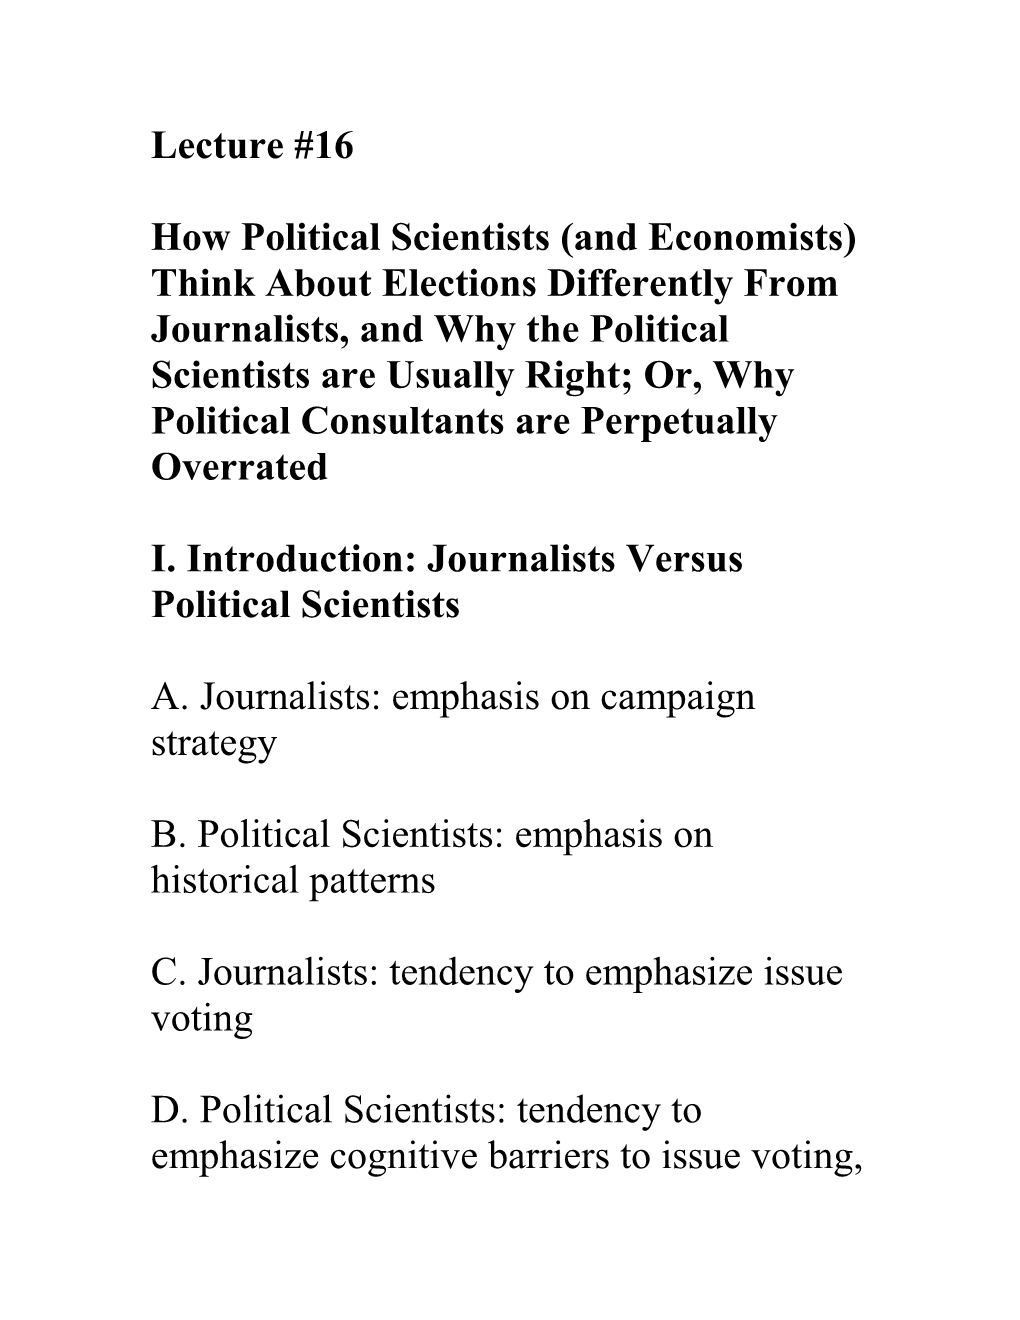 I. Introduction: Journalists Versus Political Scientists